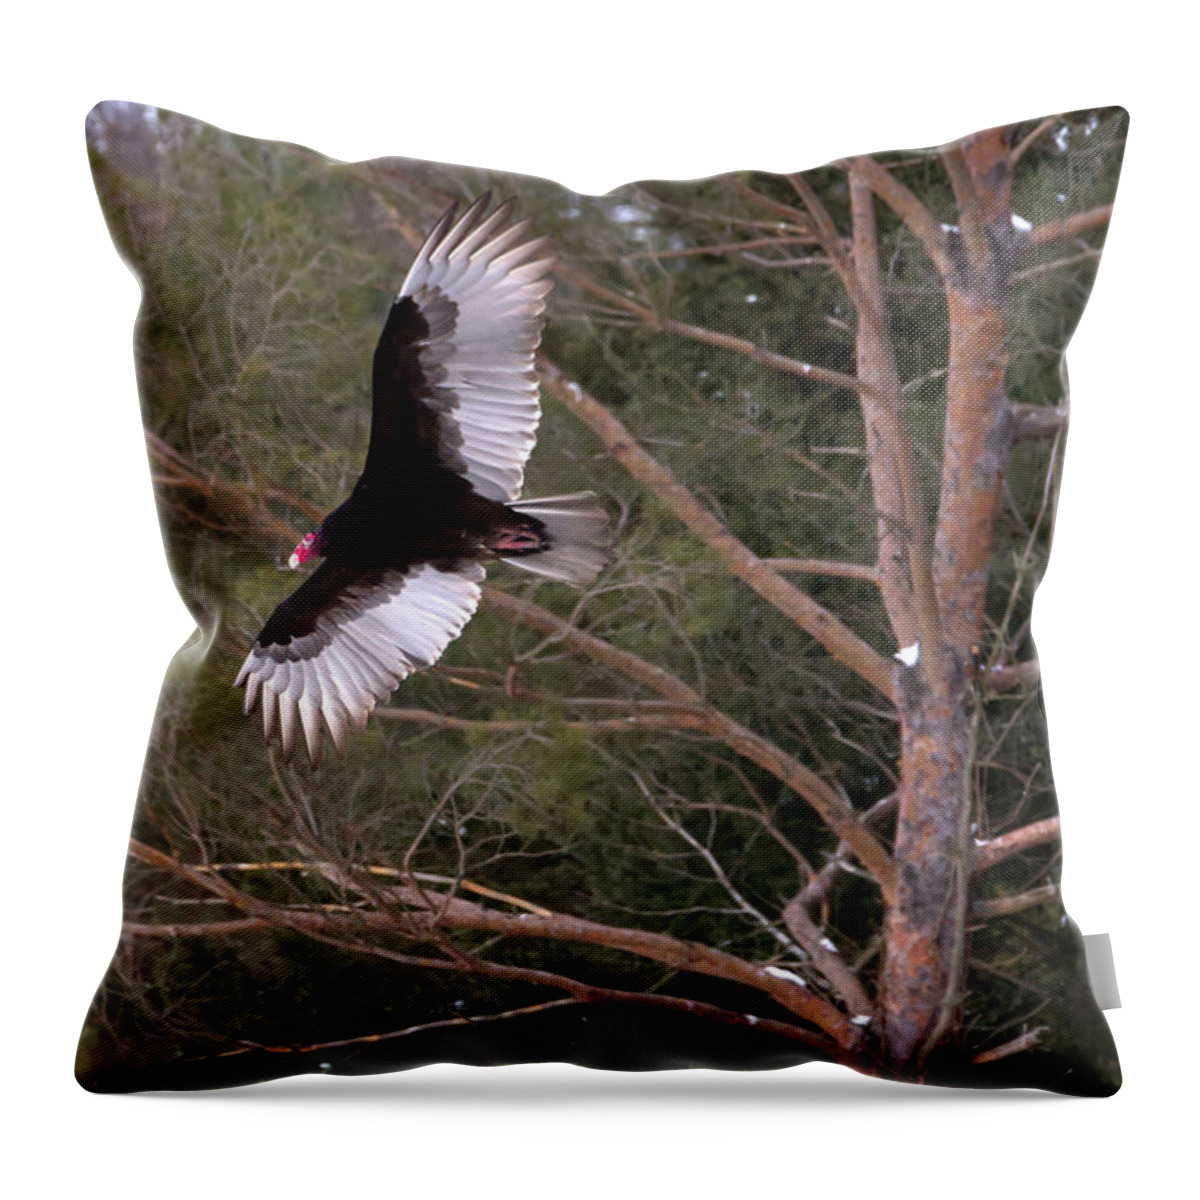 Turkey Throw Pillow featuring the photograph Turkey Vulture Soaring by Flinn Hackett